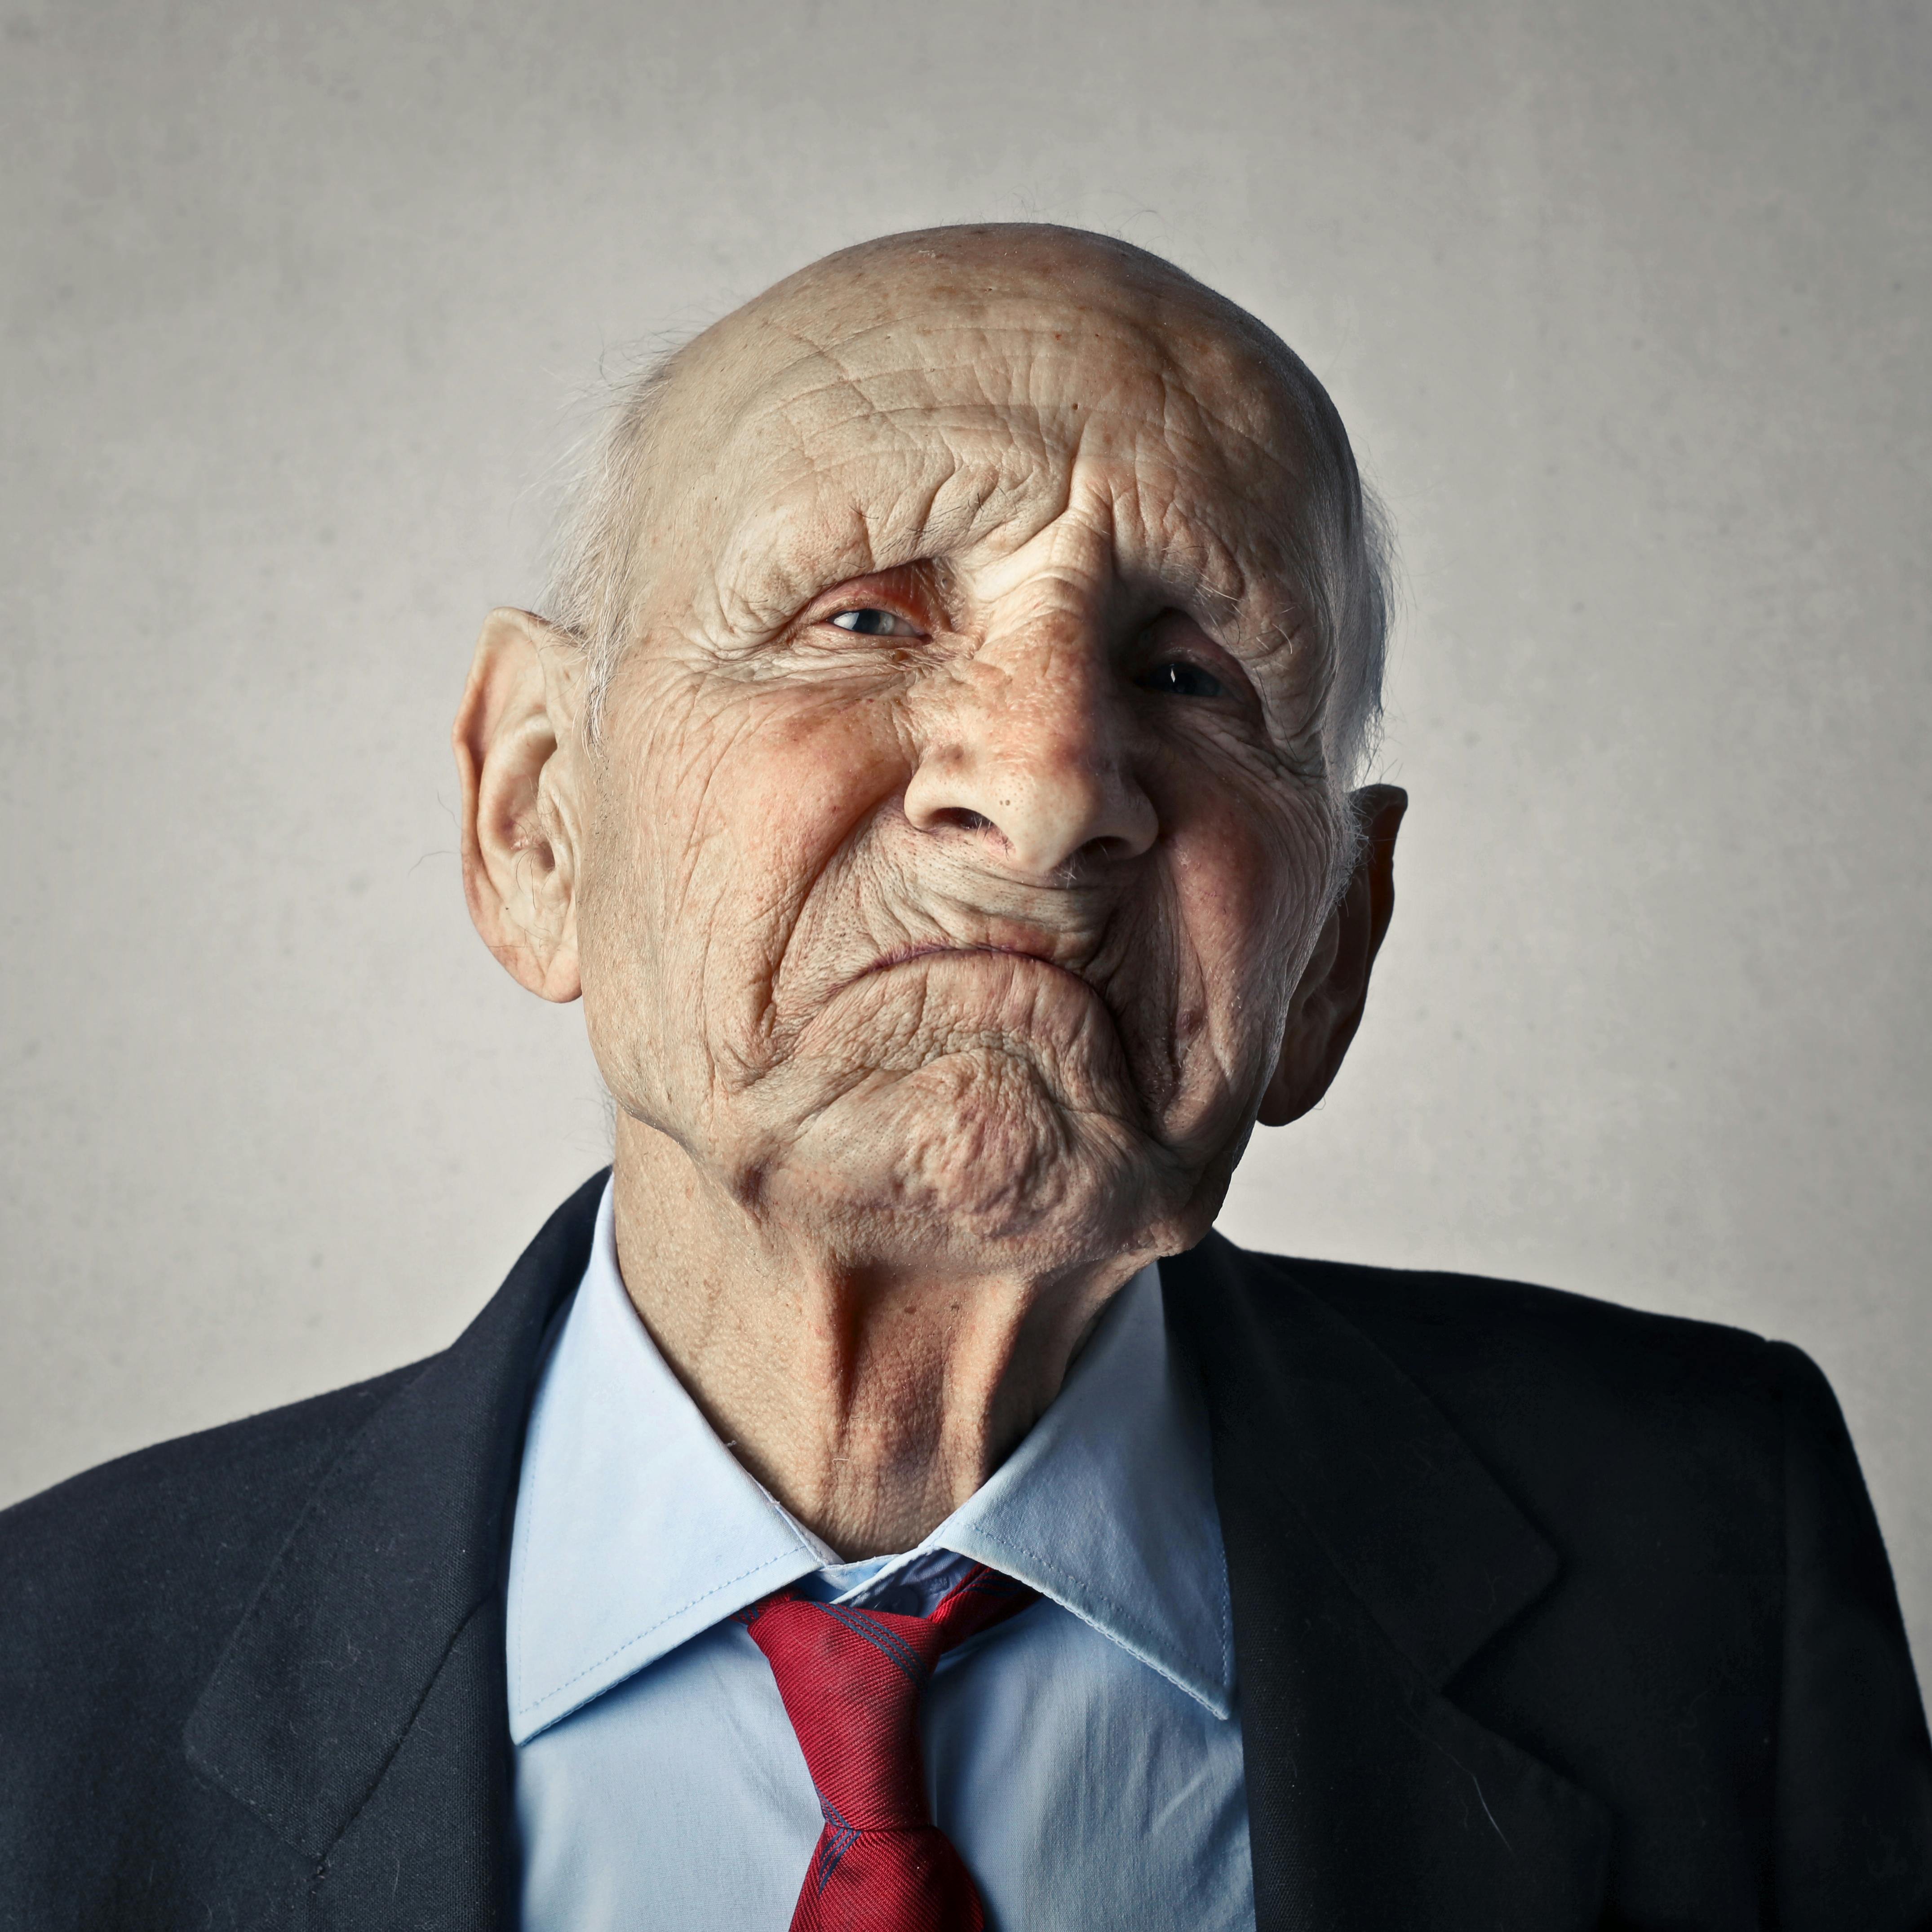 An angry senior man | Source: Pexels